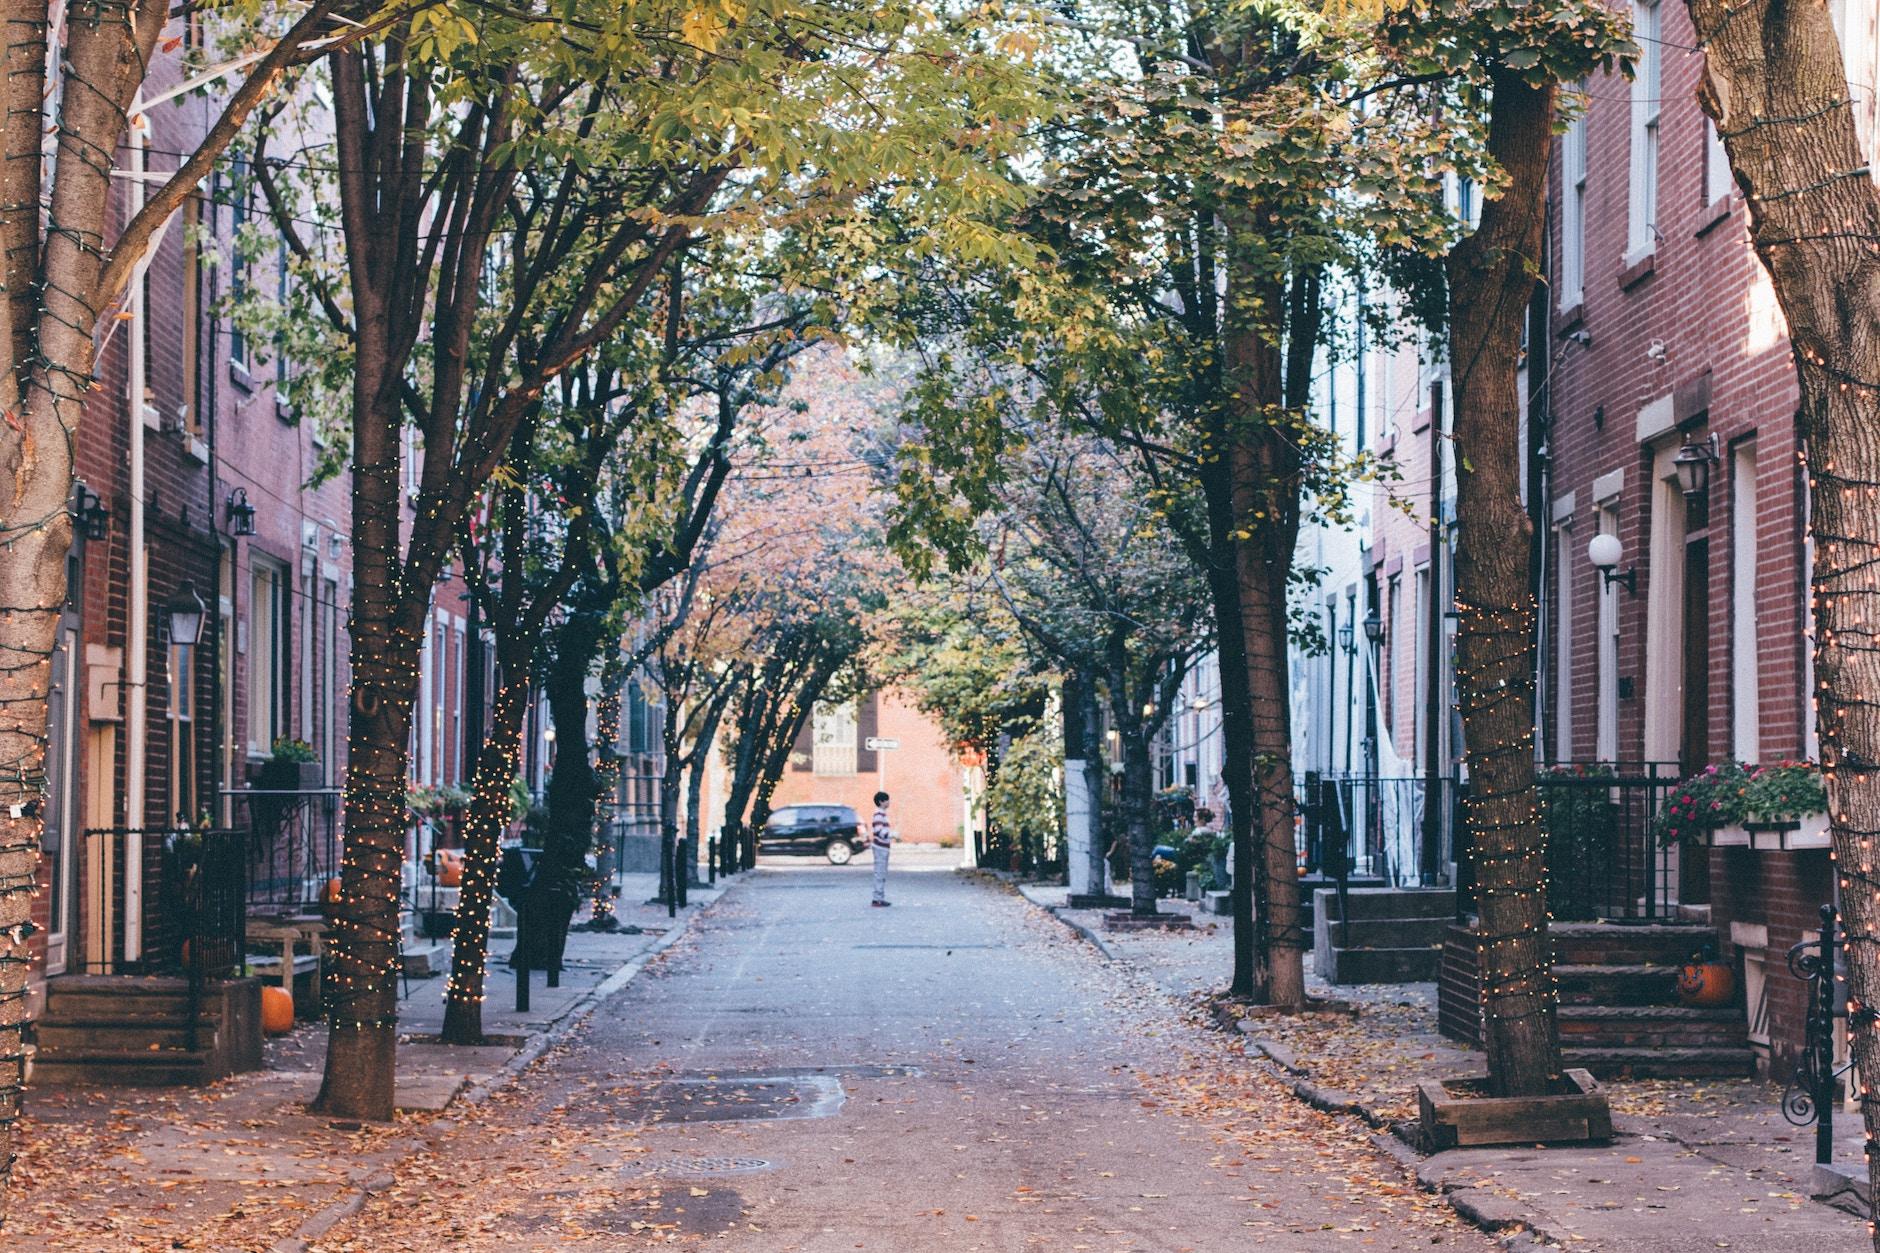 A leafy residential street in the Philadelphia